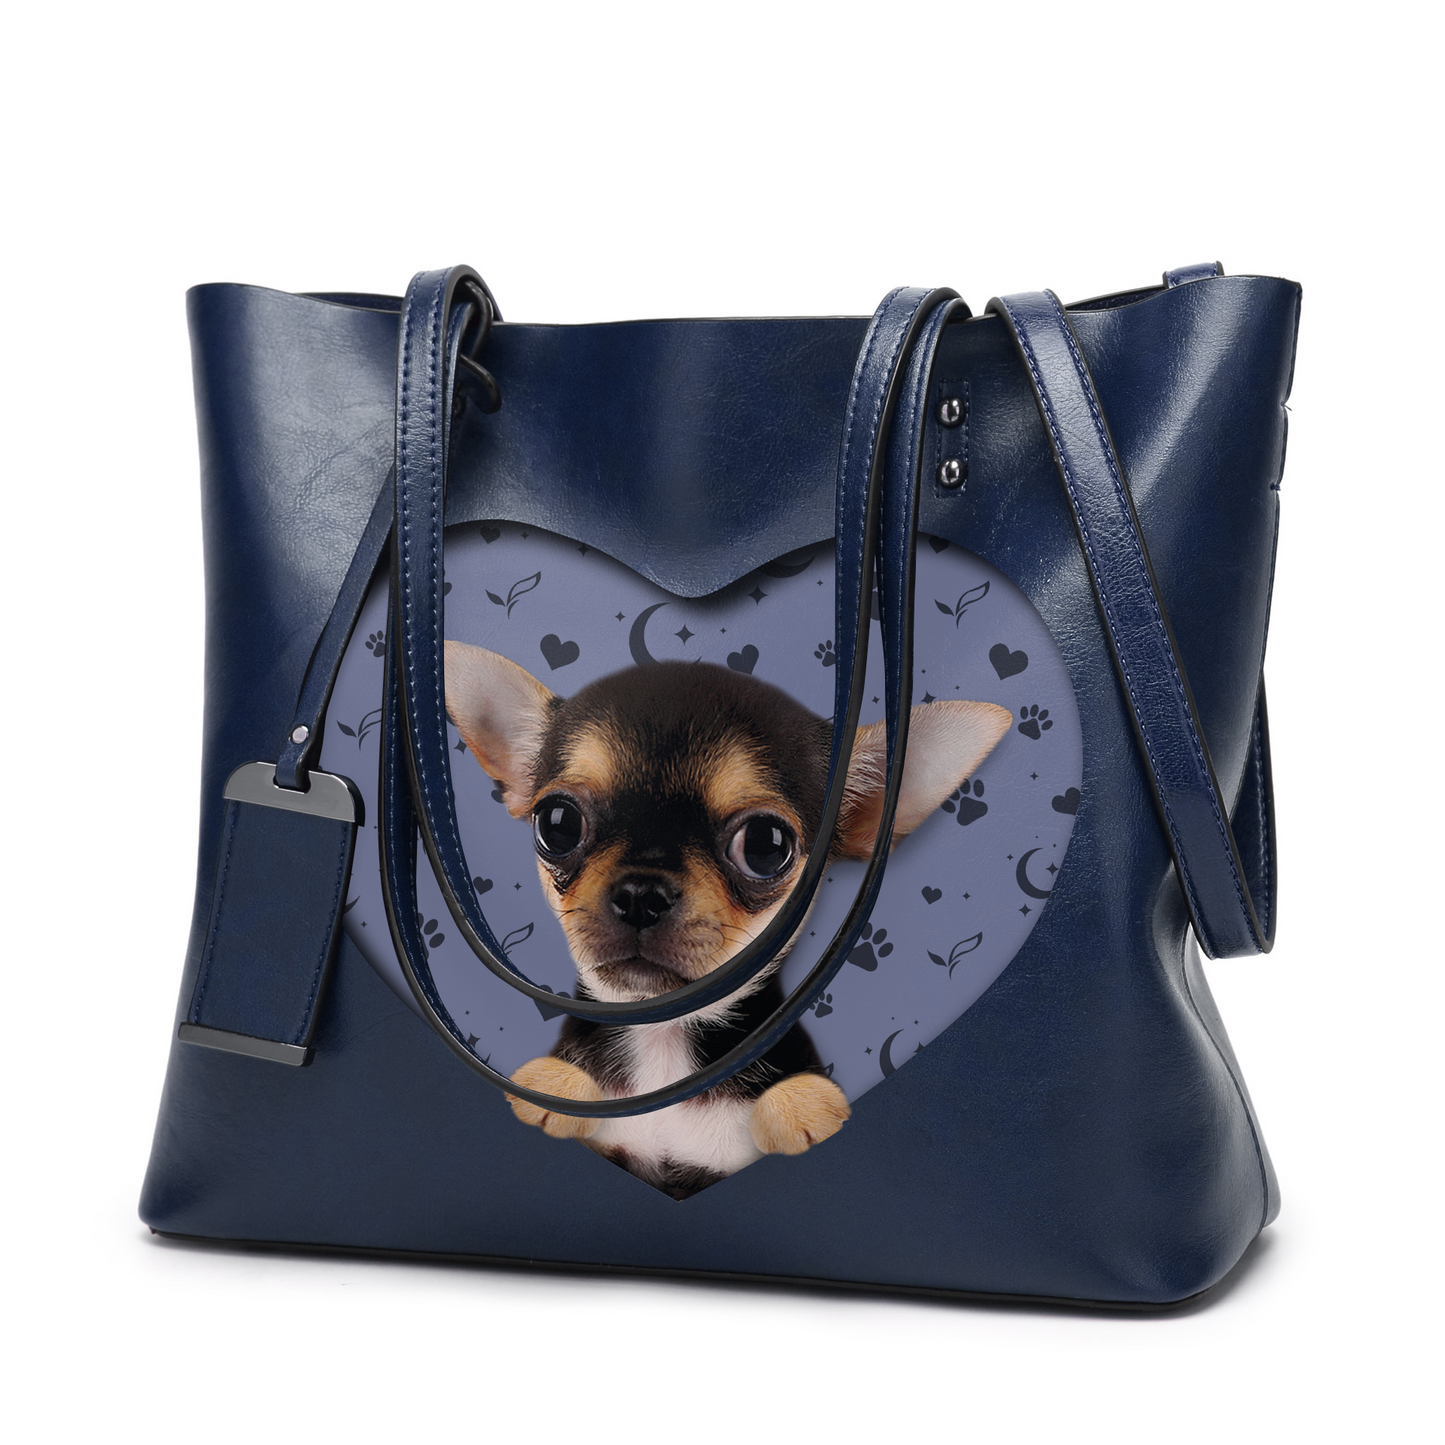 I Know I'm Cute - Chihuahua Glamour Handbag V5 - 11